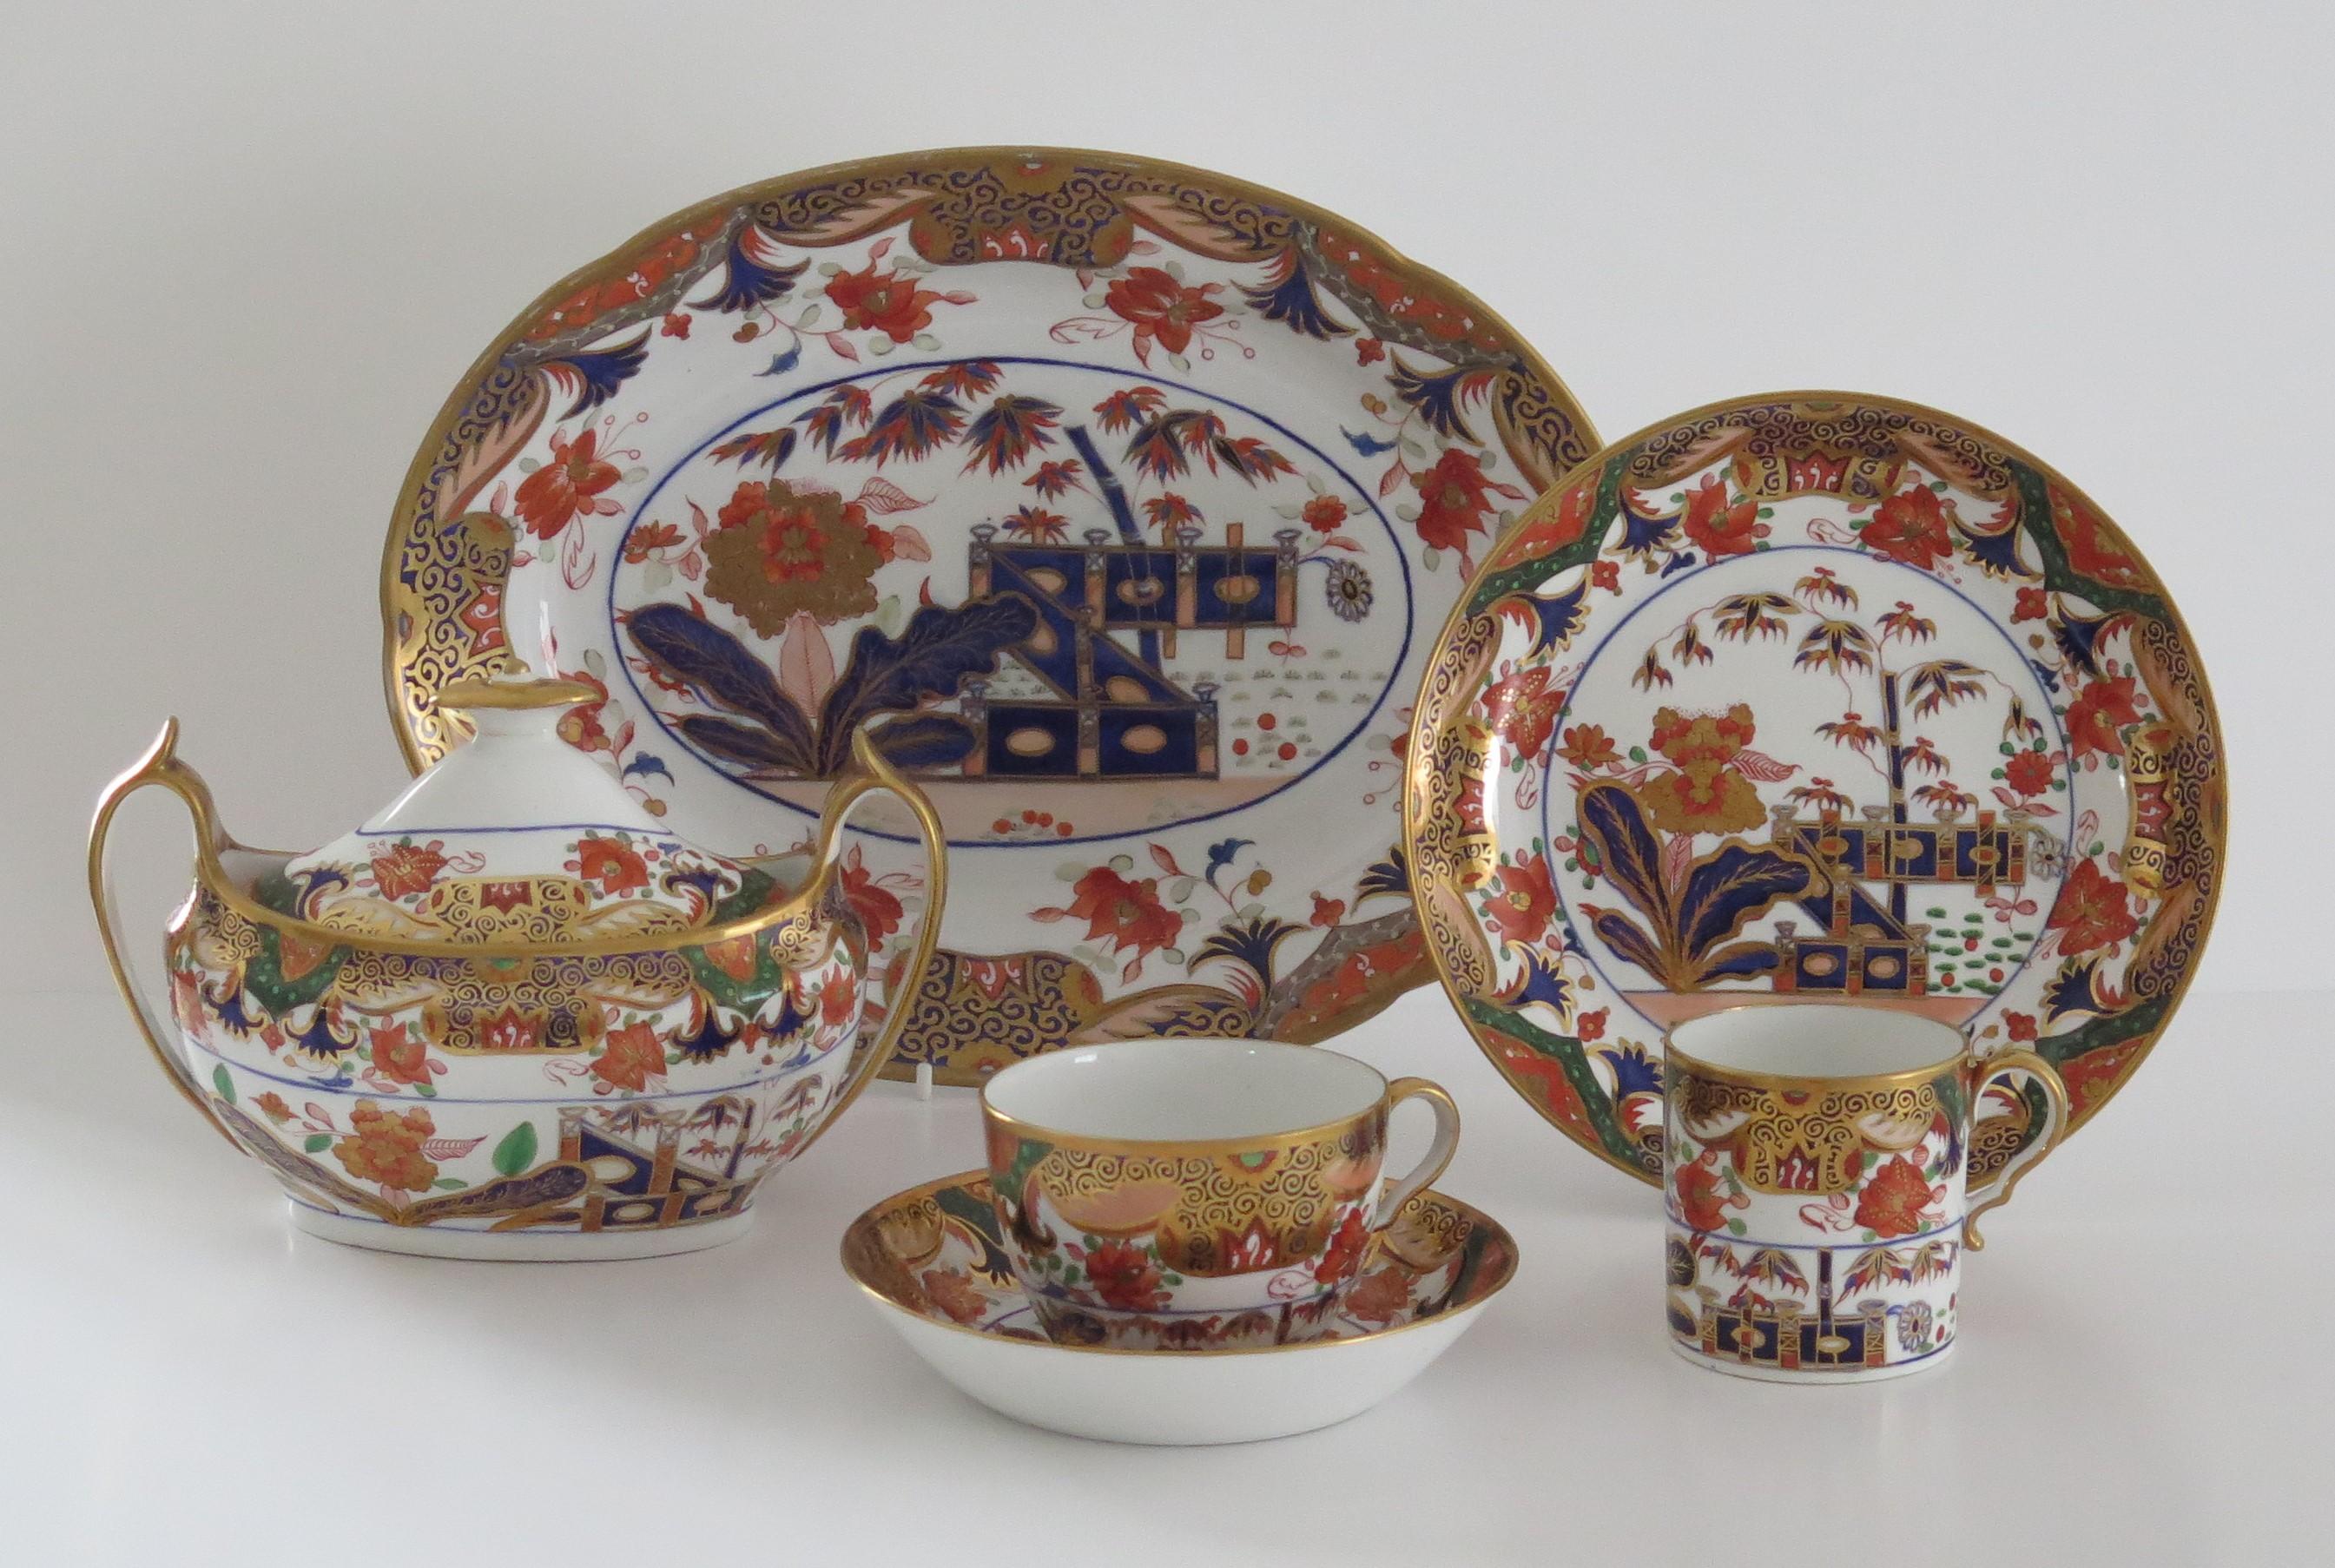 Spode Porcelain Serving Platter or Dish Hand Painted & Gilded Ptn 967 circa 1810 For Sale 7